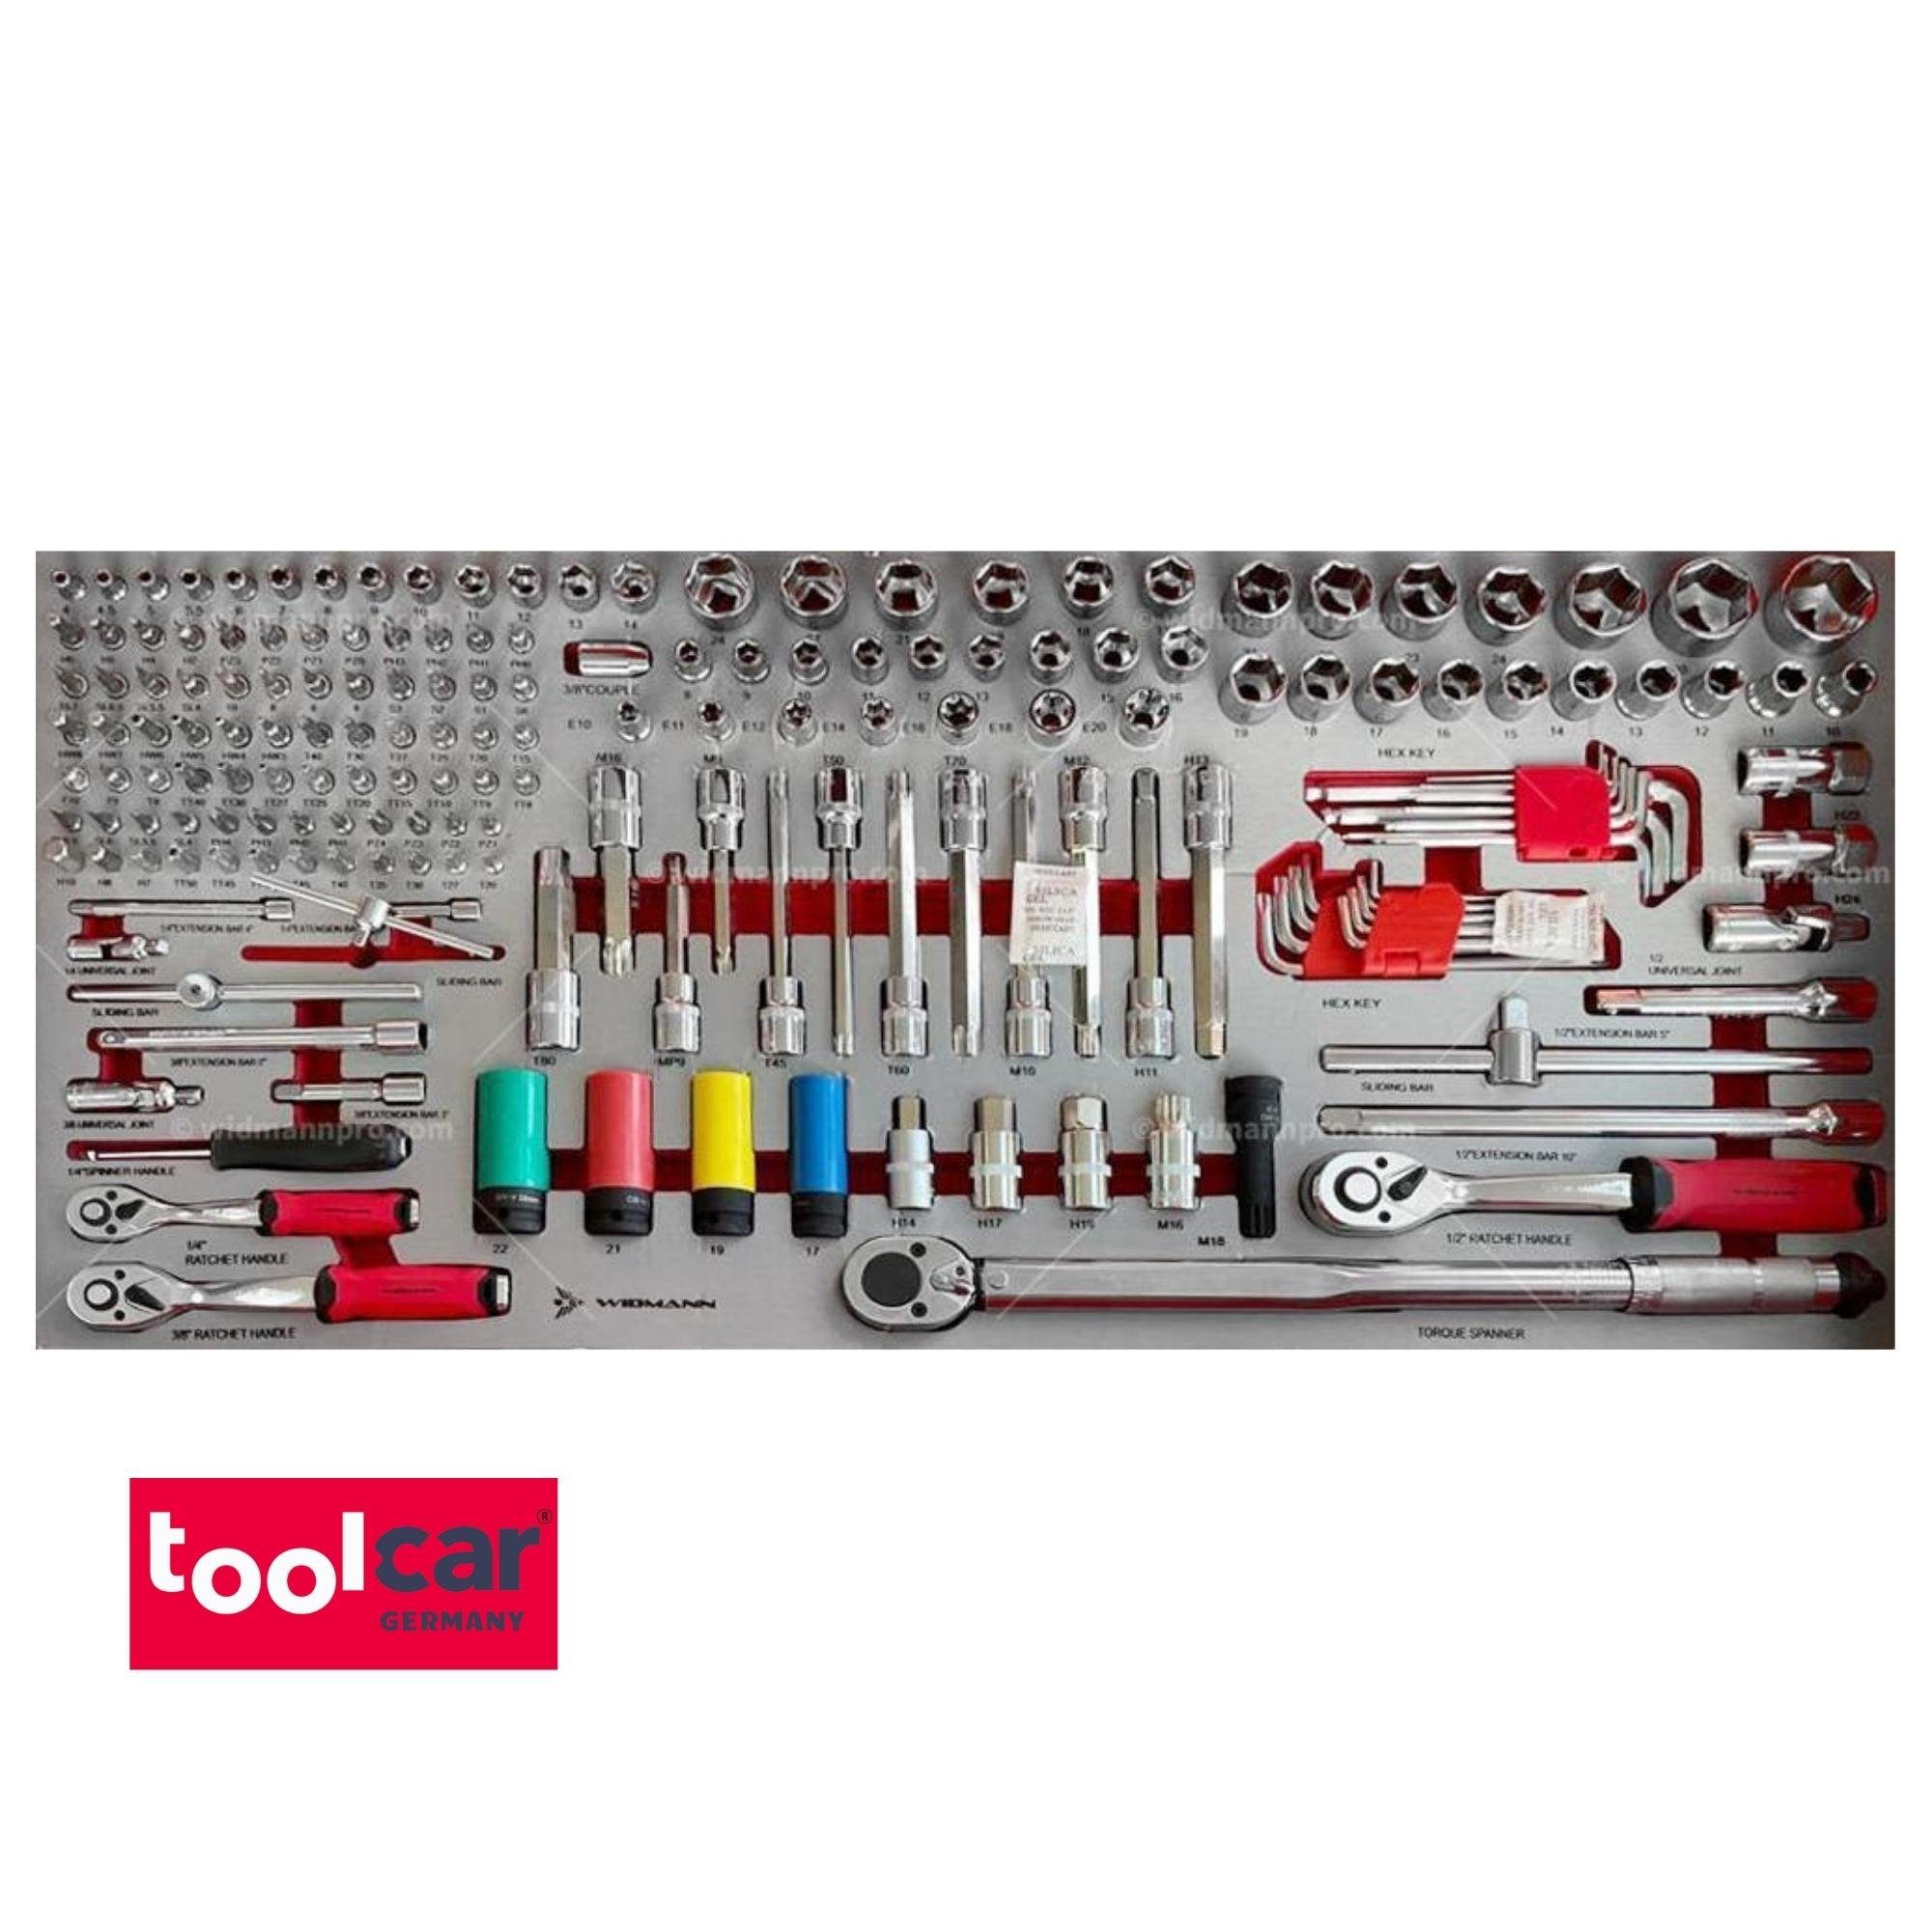 Toolcar Werkstattwagen WIDMANN Abschließbar PRO enthalten) Werkzeugset, (2 JUMBO 13, 471-tlg. Schlüssel